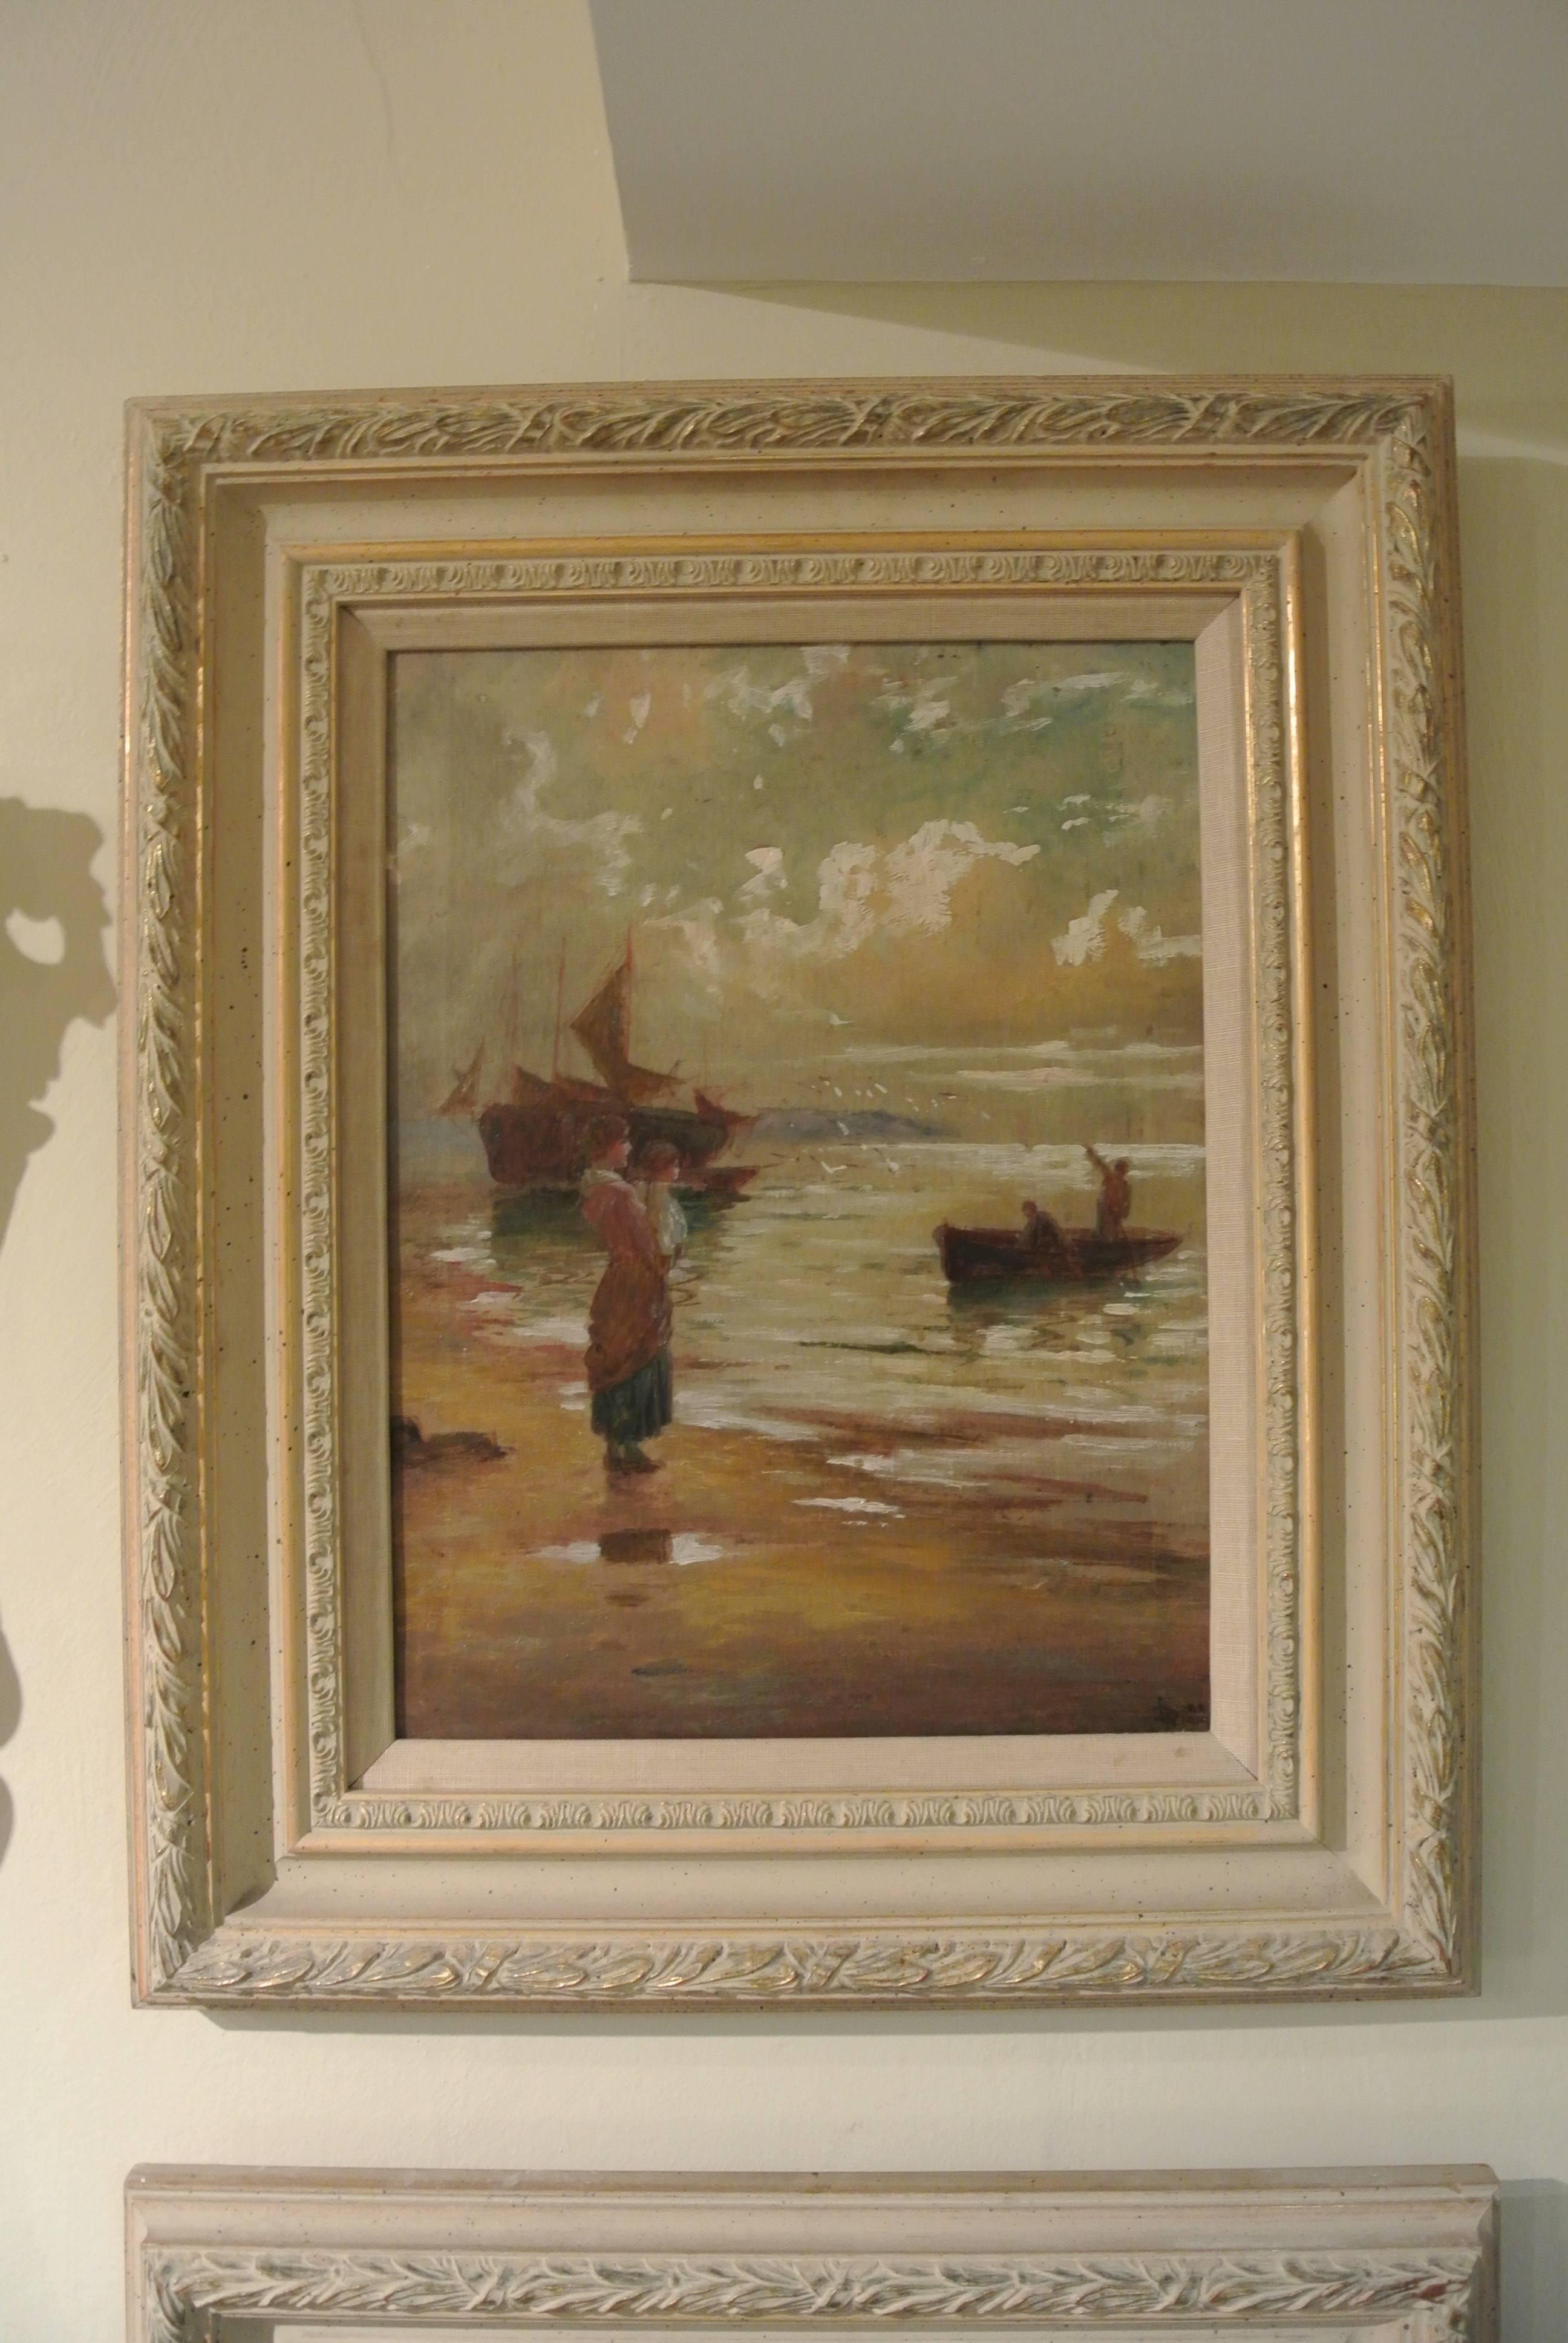 Pair of early 20th century oil on canvas coastal scenes by John Henry Boel.